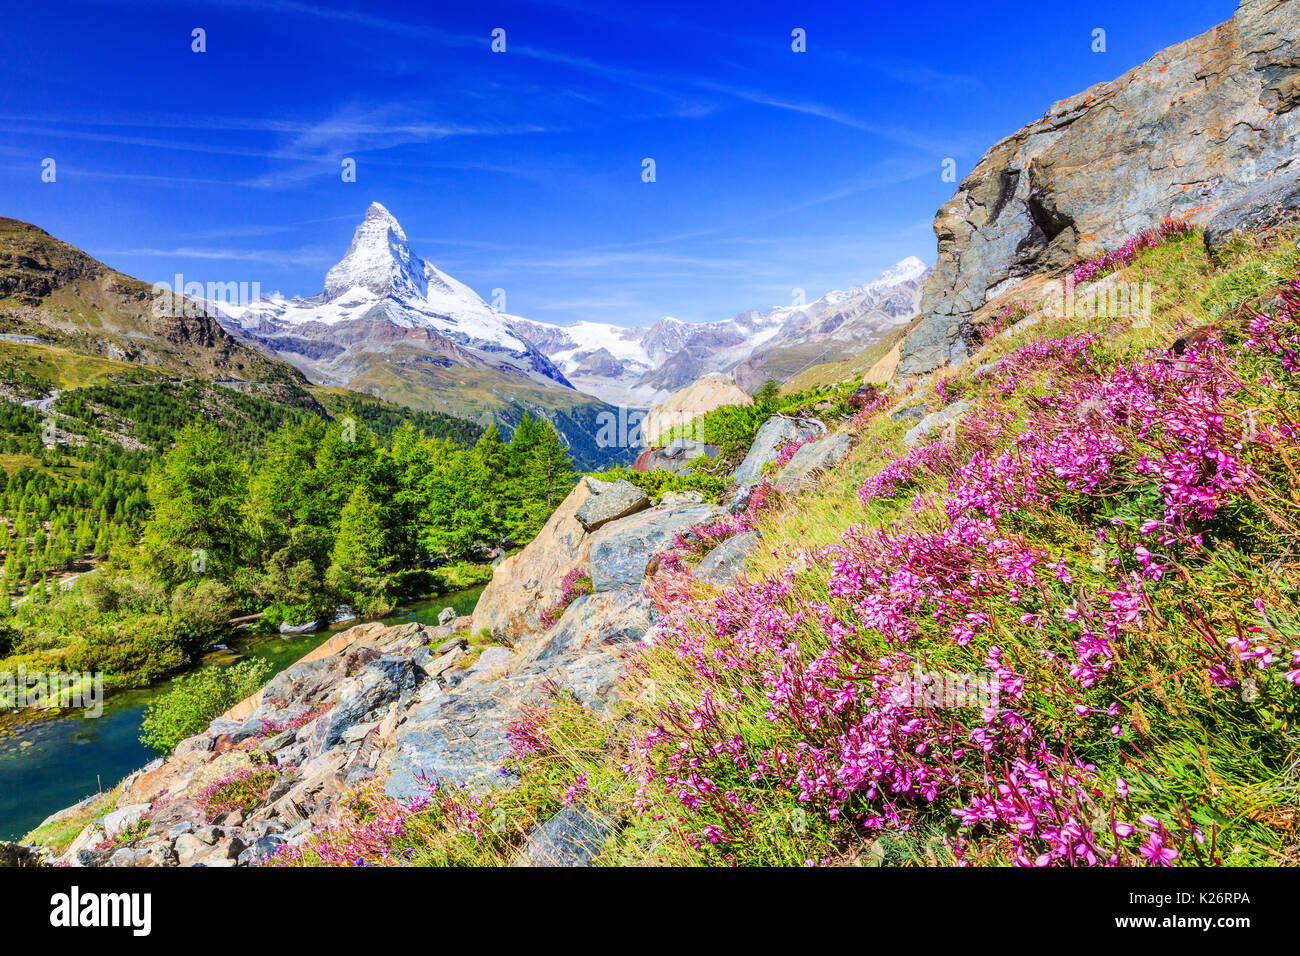 Zermatt, Switzerland. Matterhorn mountain near Grindjisee Lake with flowers in the foreground. Canton of Valais. Stock Photo